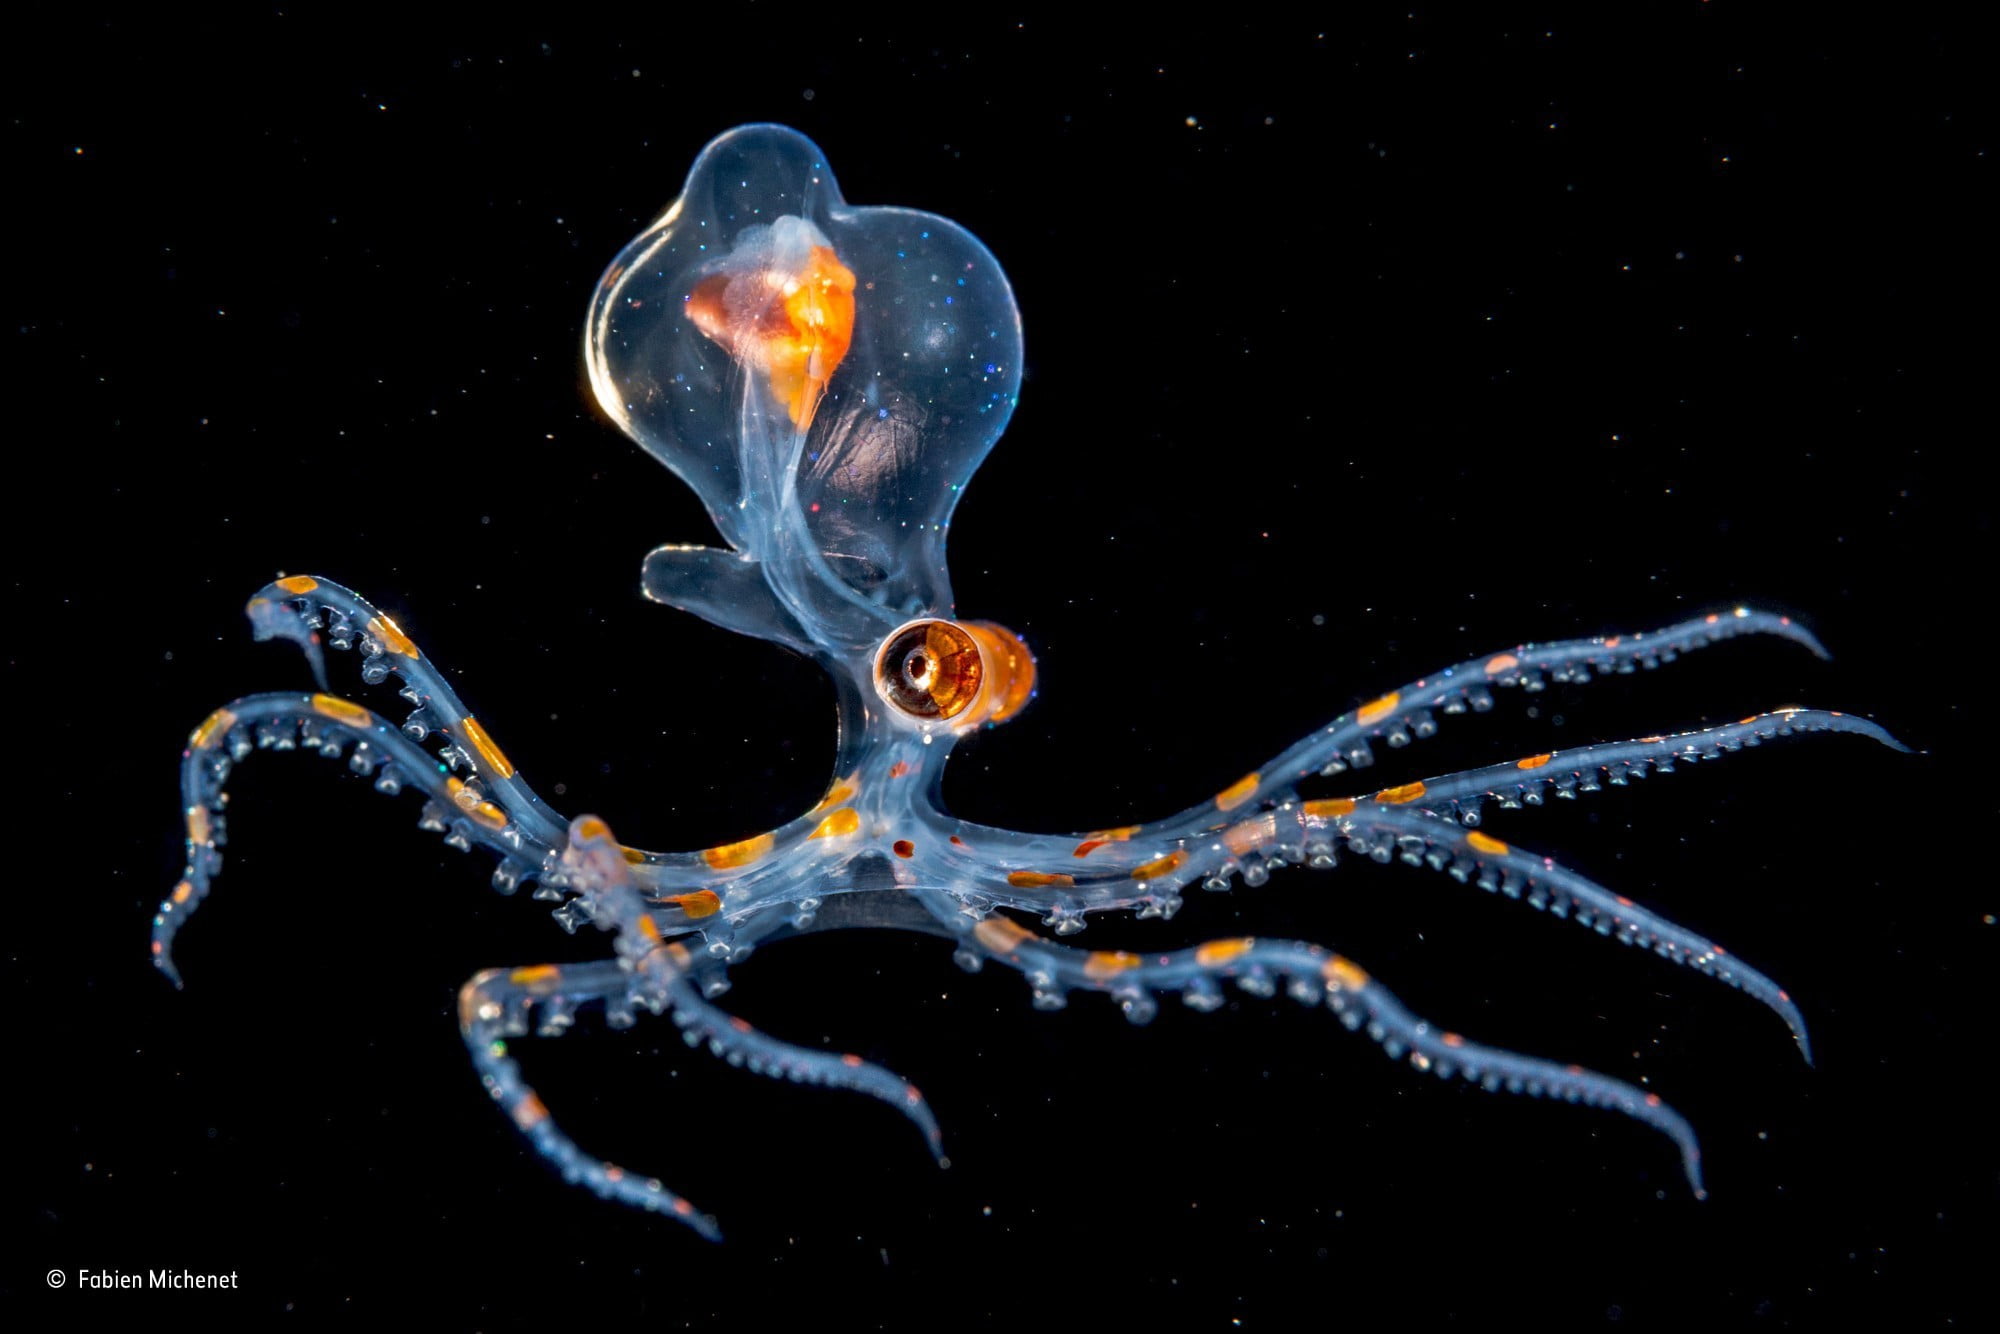 blue and orange octopus, nature, water, underwater, sea